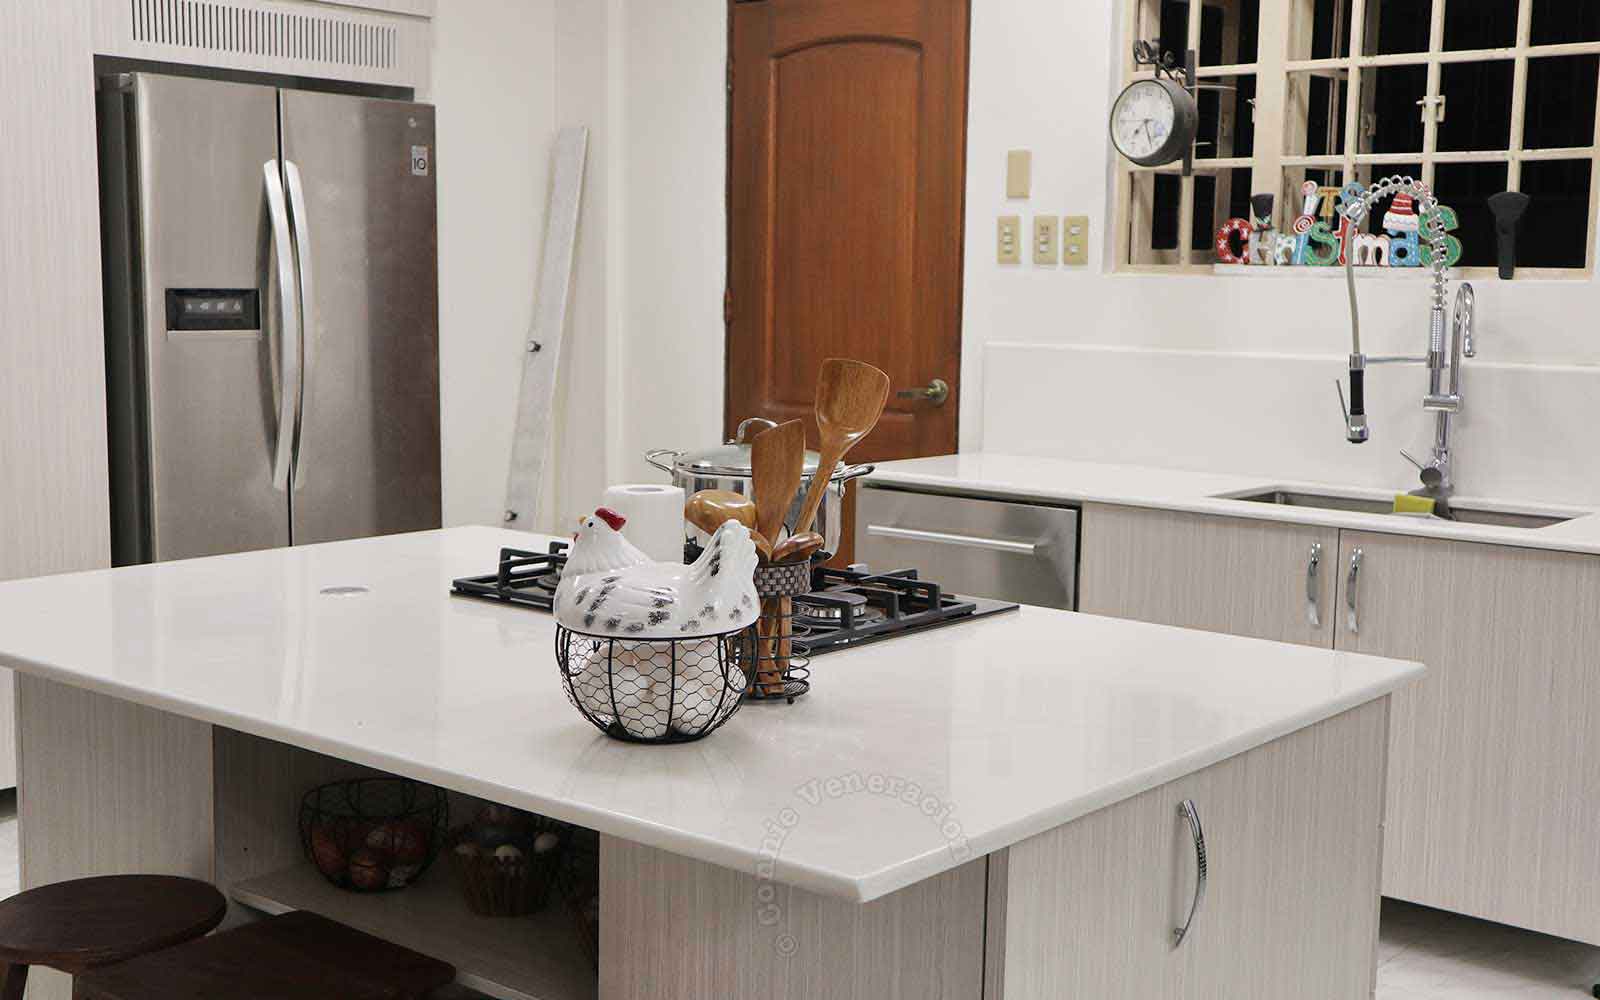 Off-white kitchen motif with engineered quartz countertops